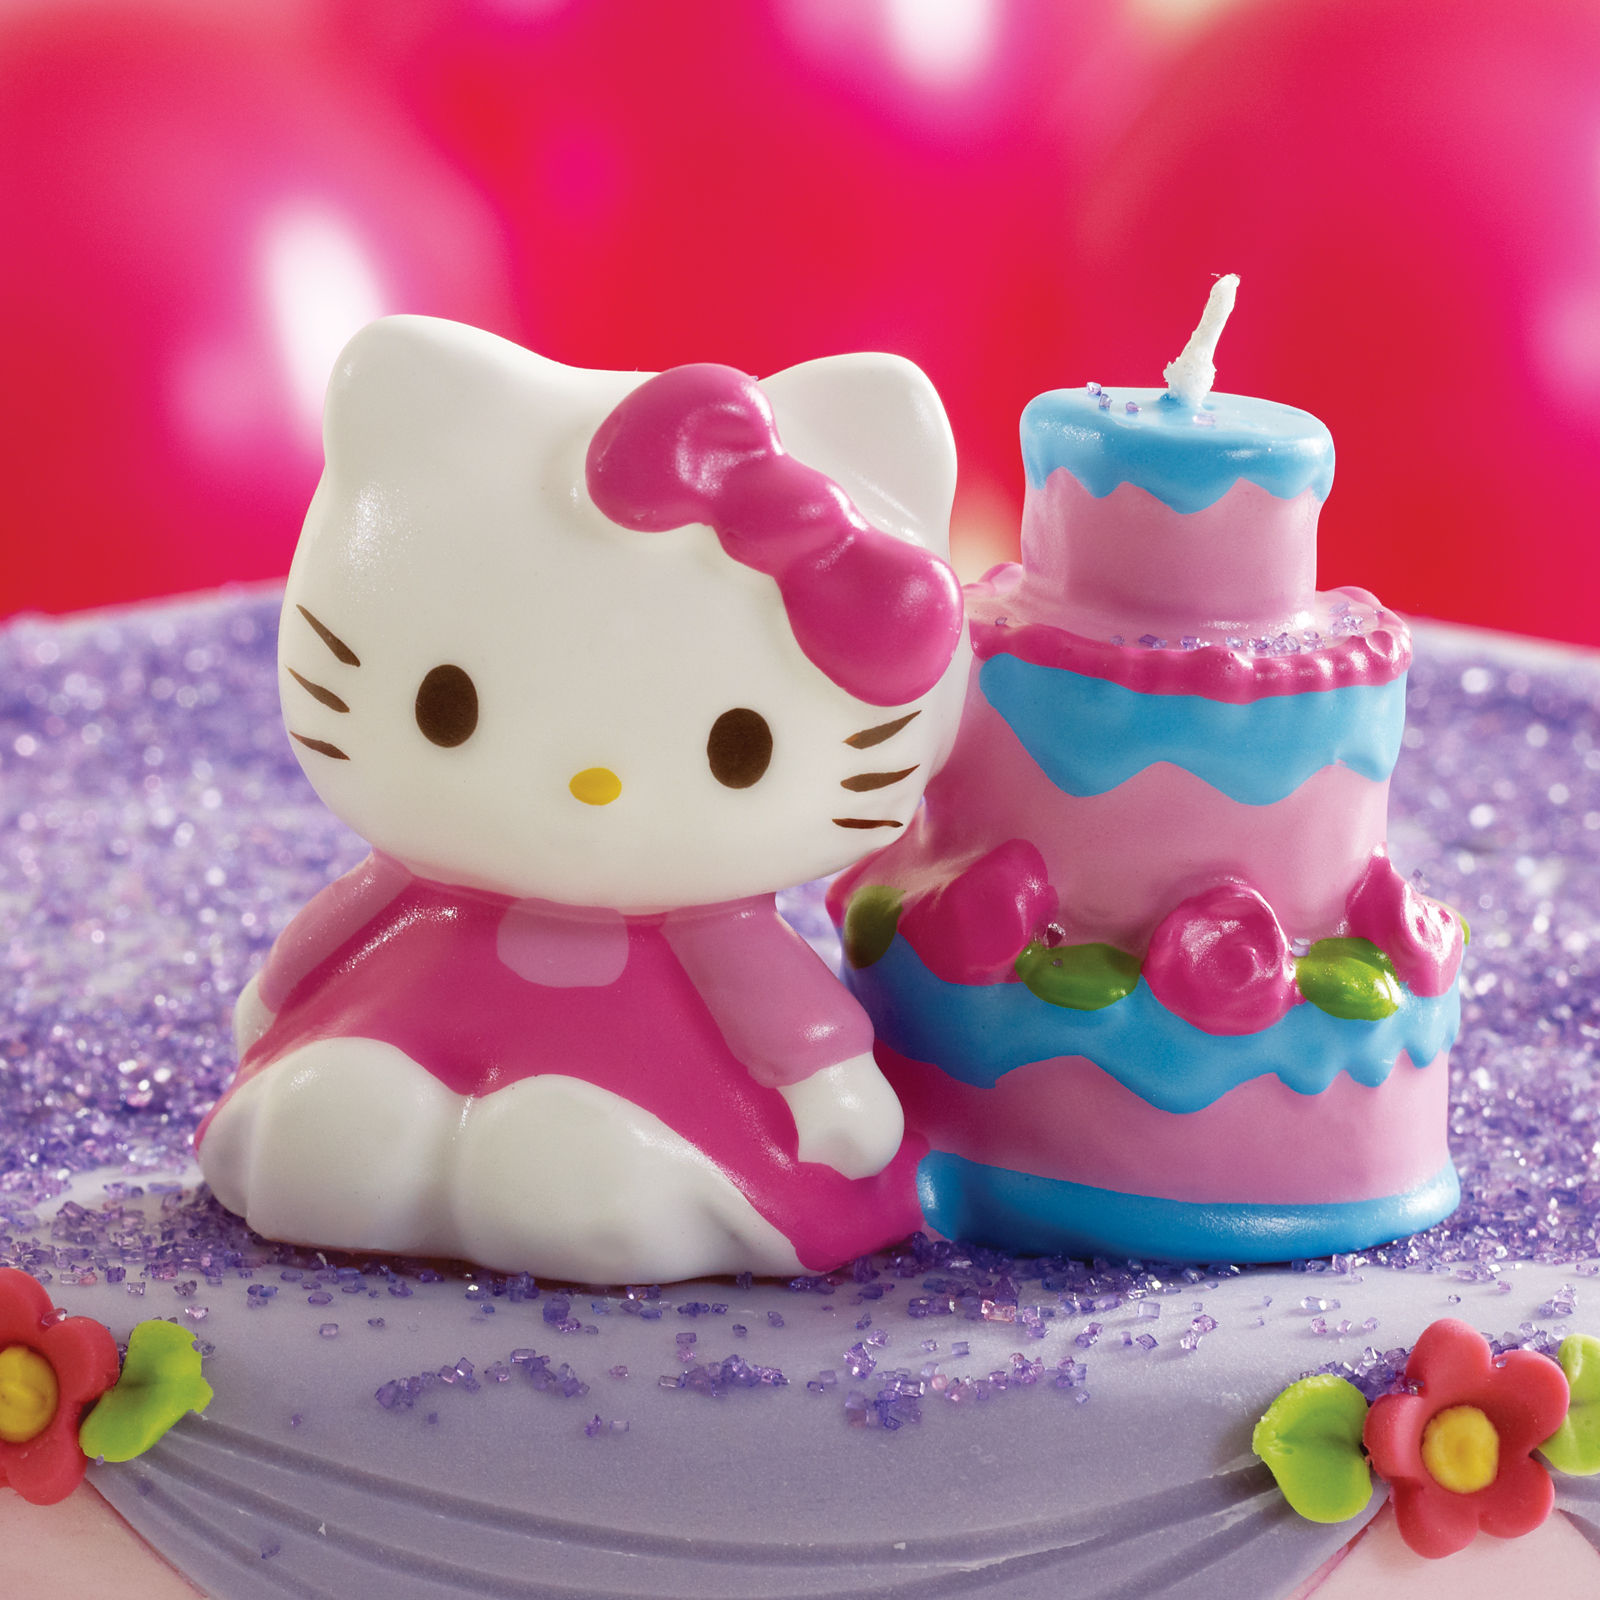 Happy Birthday Hello Kitty Image Wallpapers